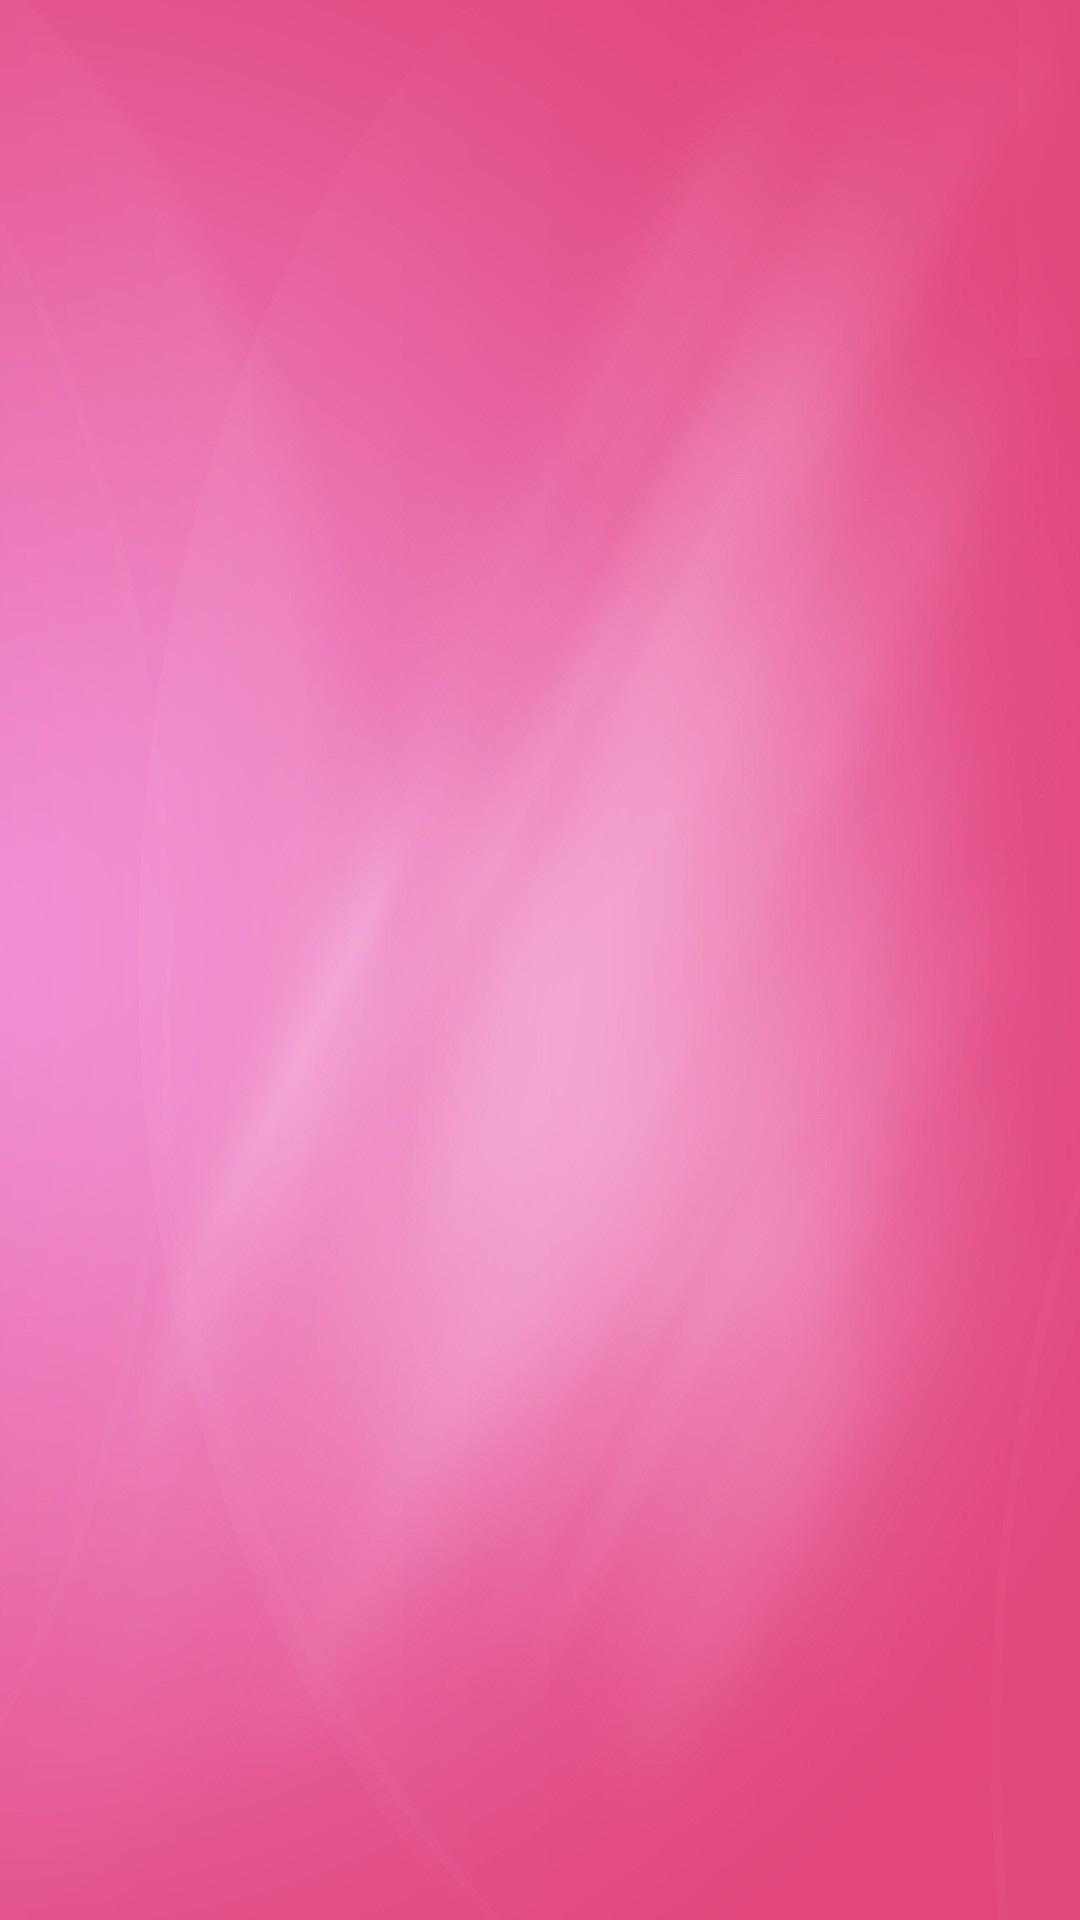 HD Pink iPhone Wallpaper 3D iPhone Wallpaper